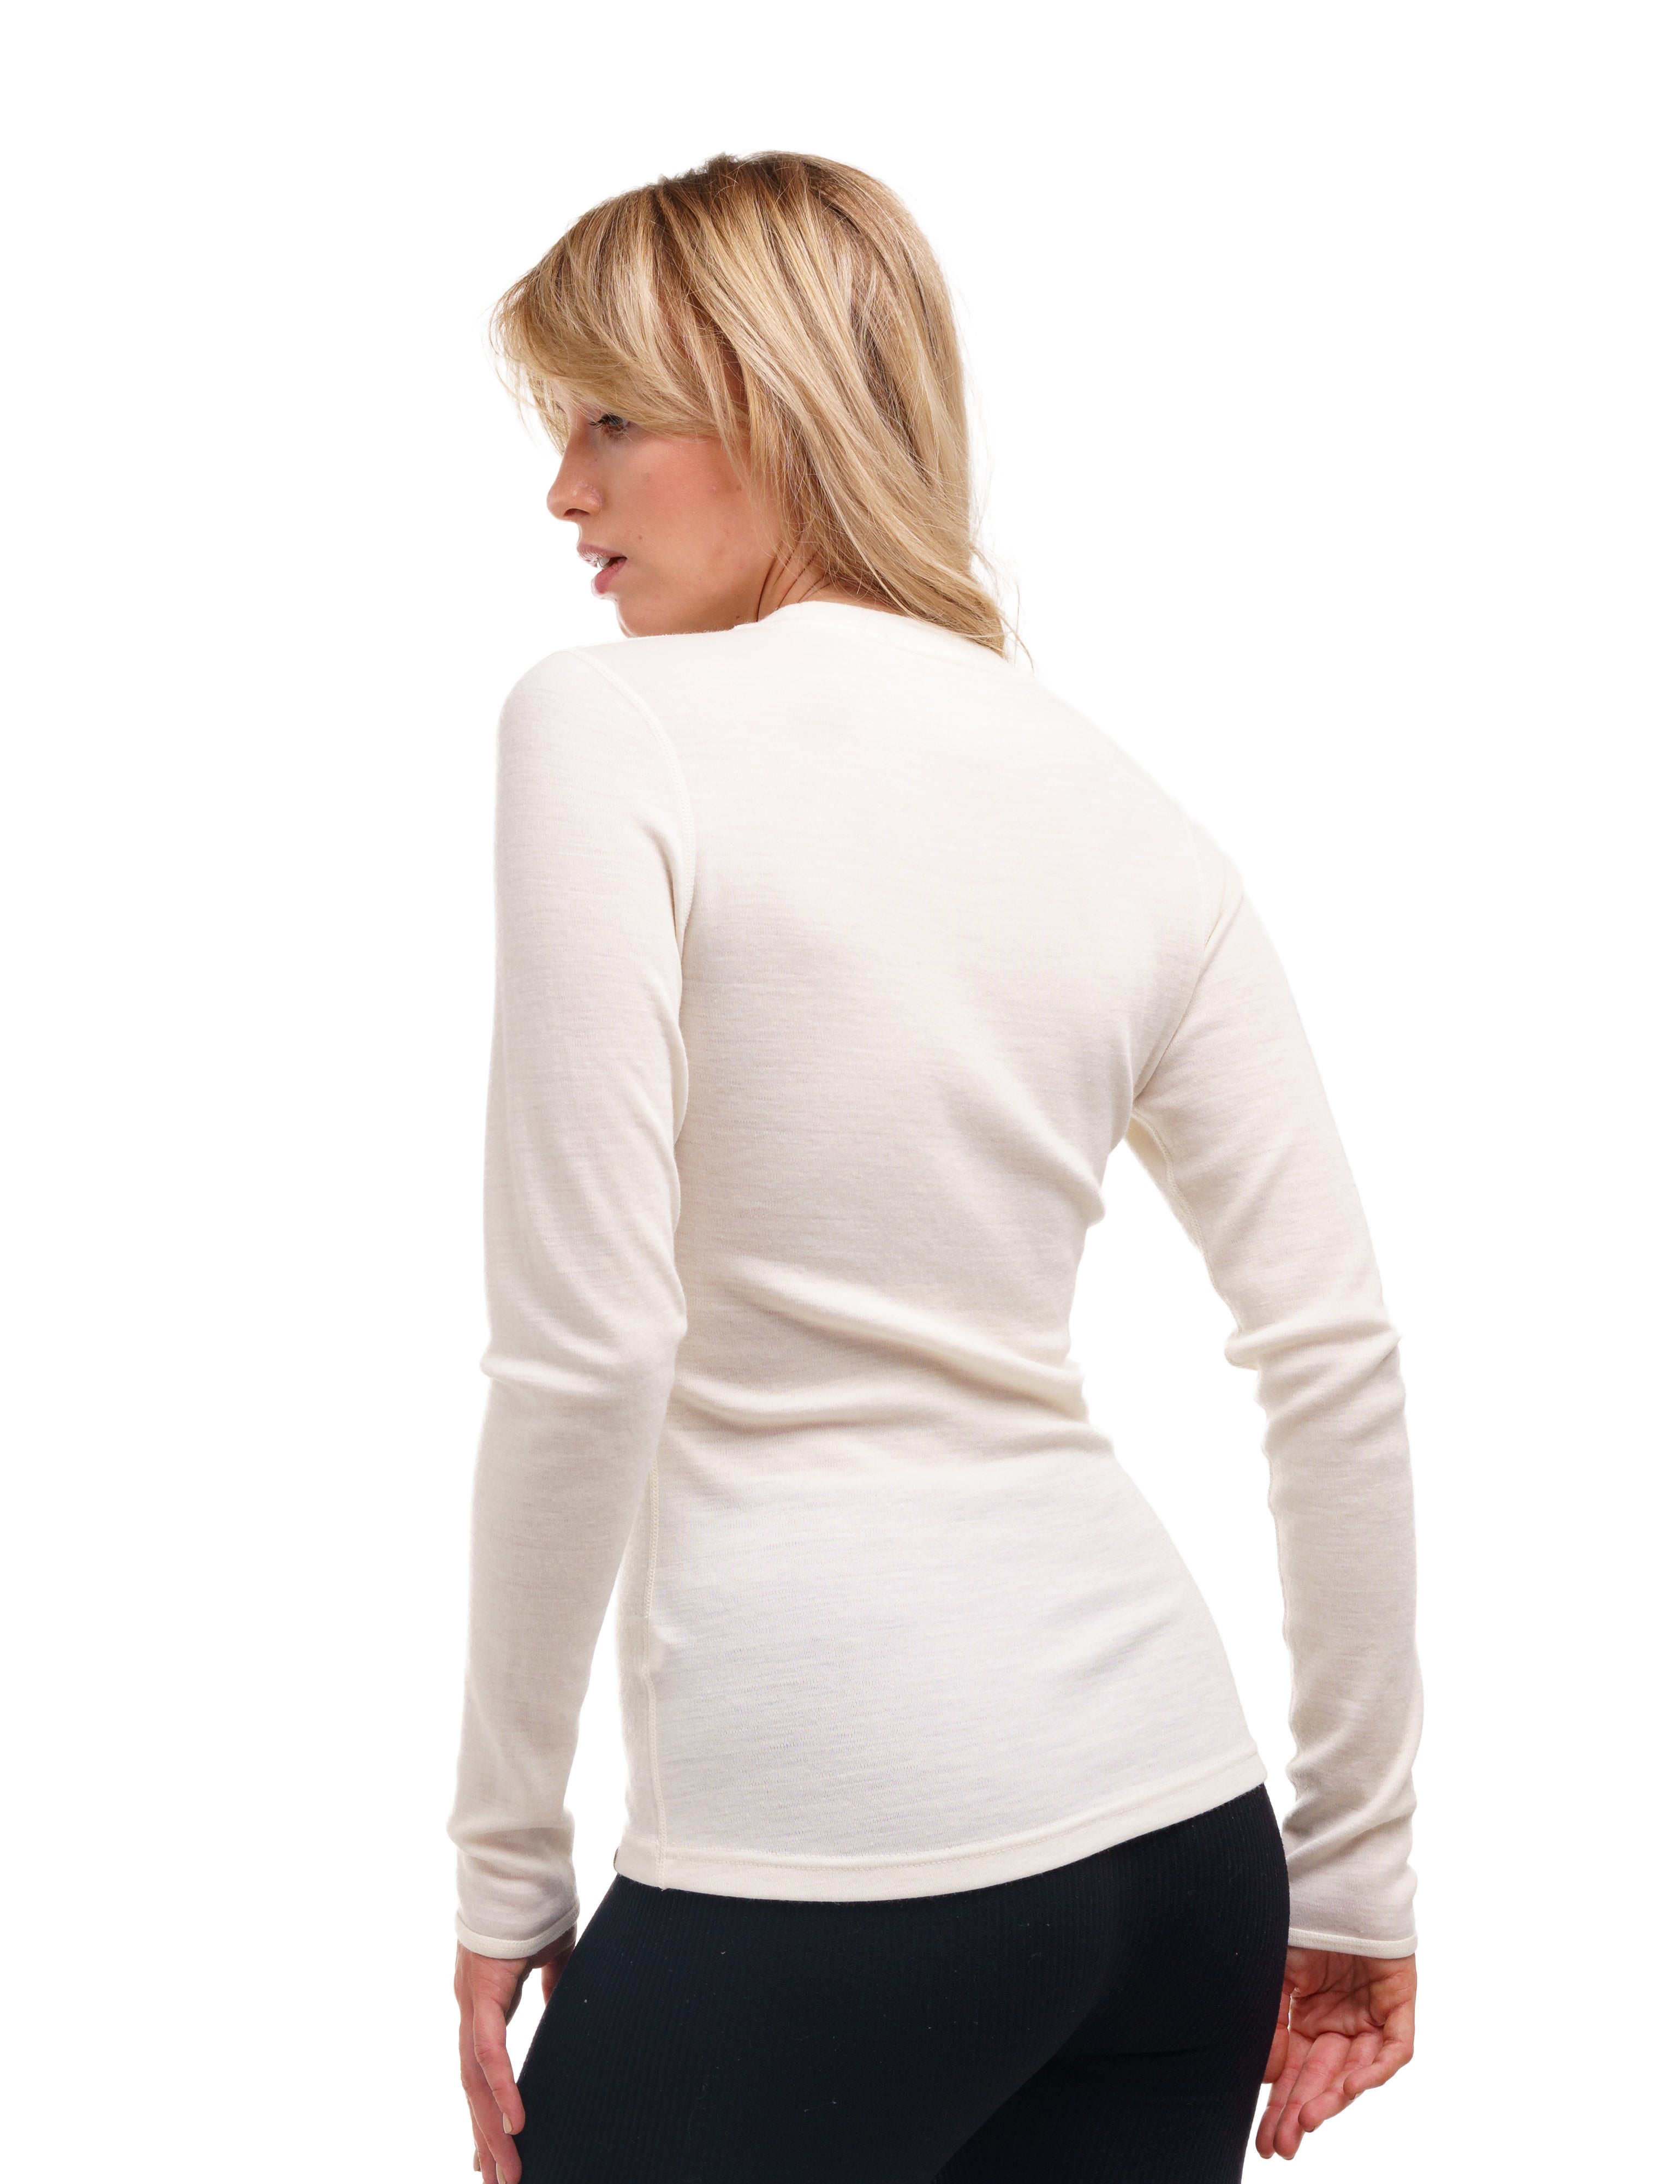 Merino.tech Merino Wool Base Layer Women 100% Merino Wool Midweight,  Lightweight Long Sleeve Thermal Shirt + Wool Socks